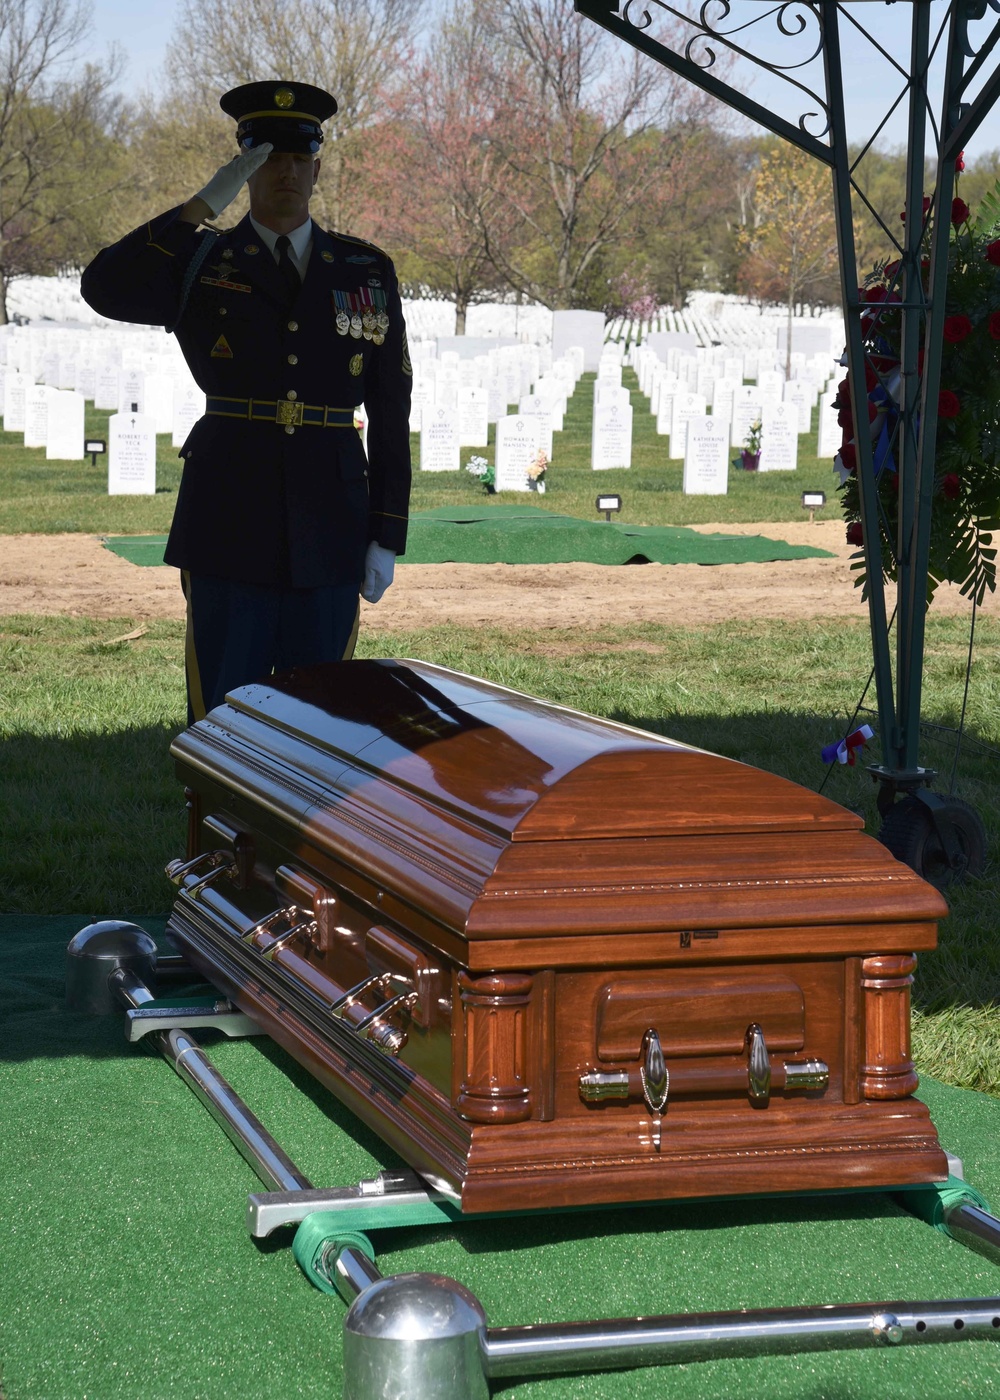 Army Master Sgt. Joseph Durakovich Funeral